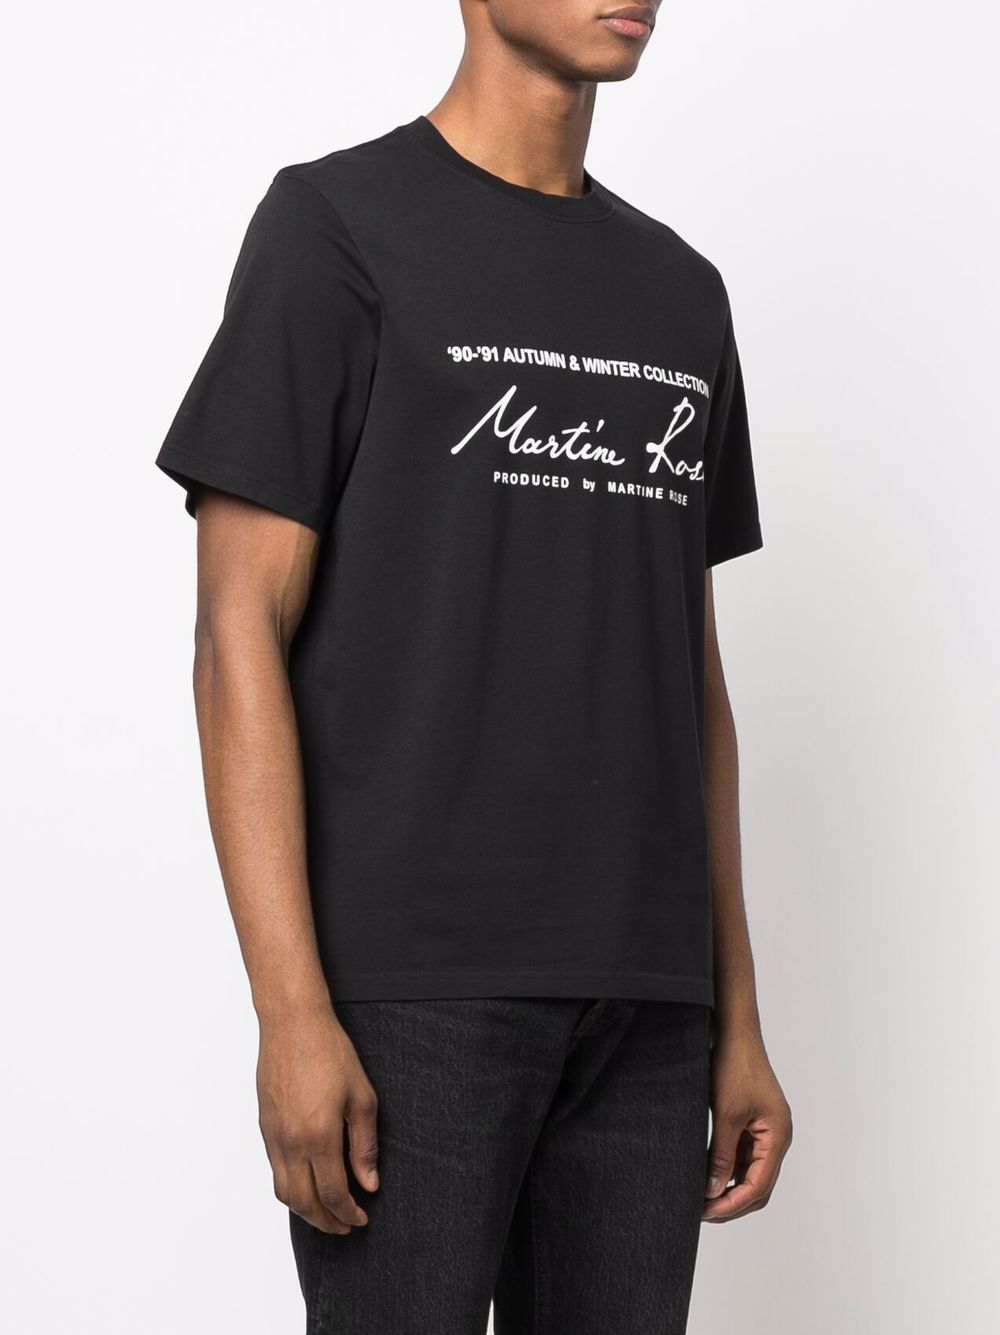 Martine Rose '90/'91 AW Collection Logo T-shirt - Farfetch